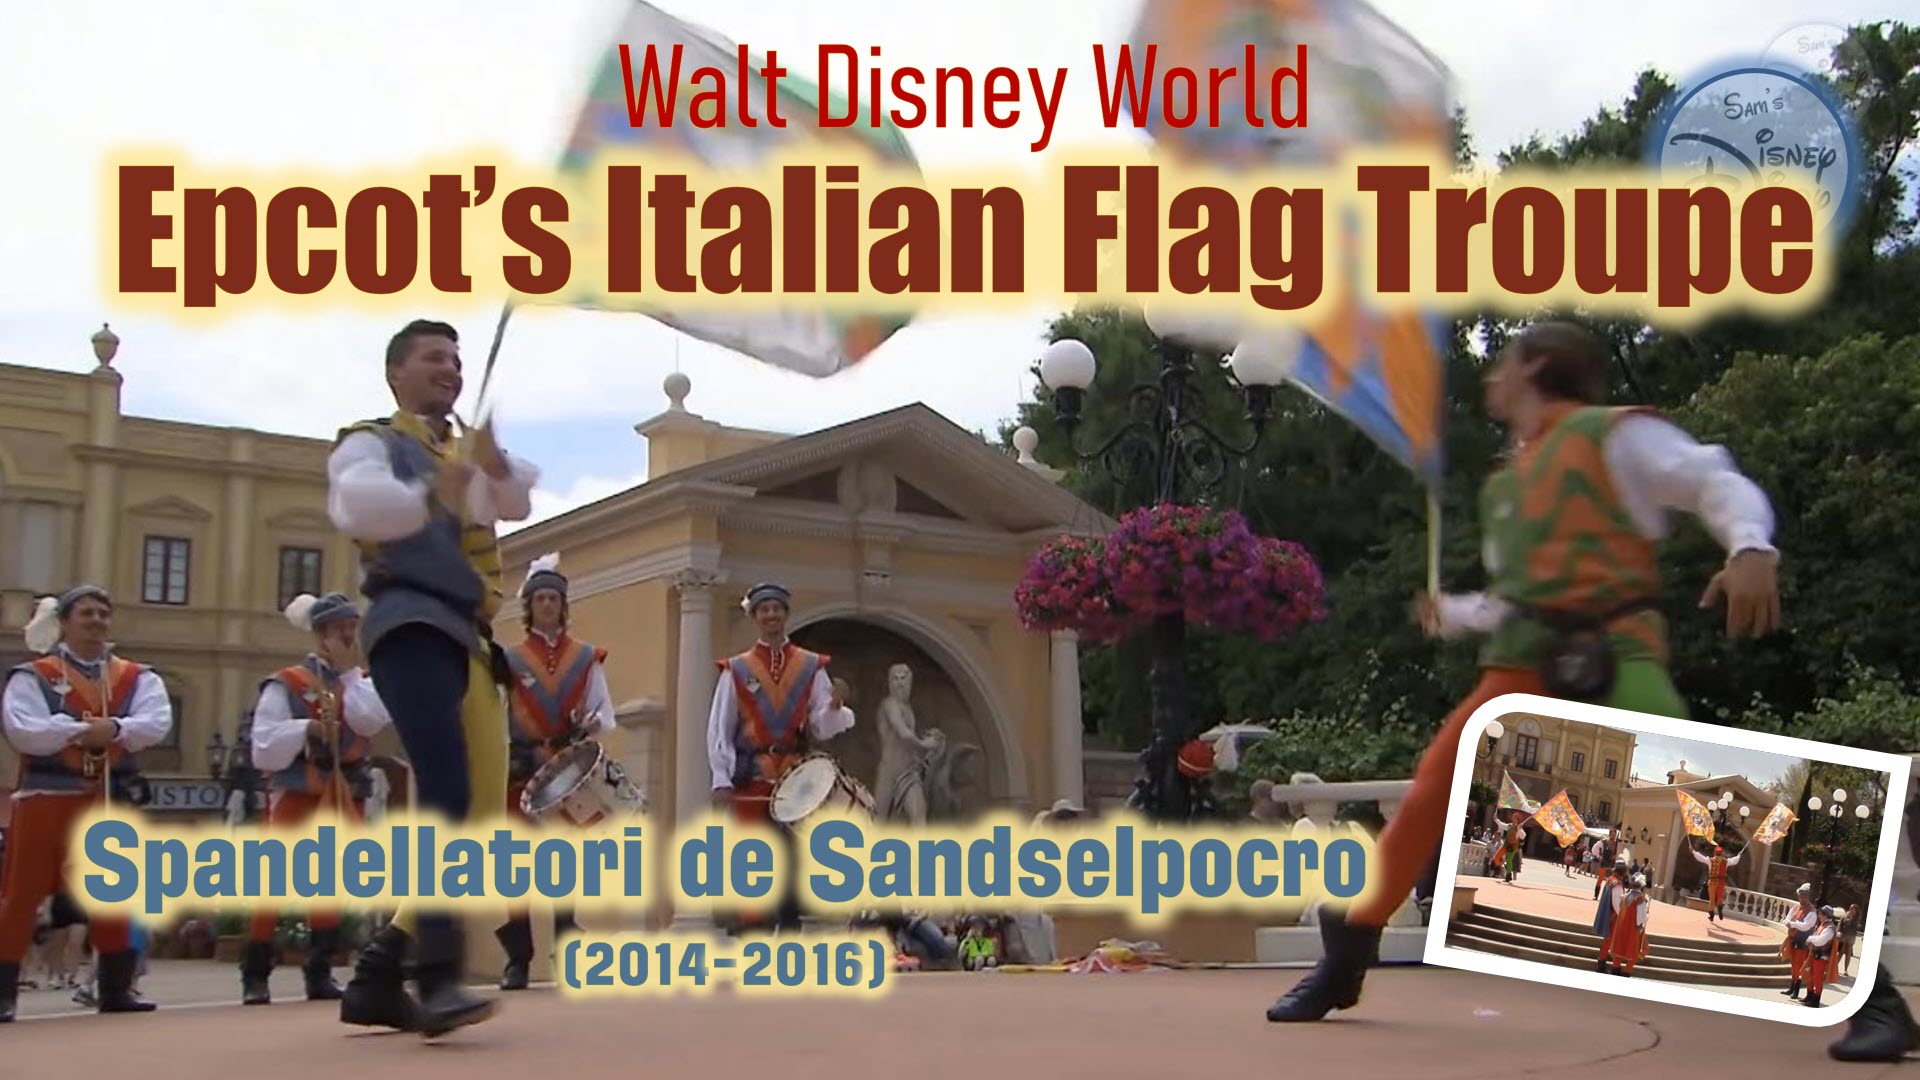 Spandellatori de sandselpocro (Epcots Italian Flag Throwing Troupe) 2015